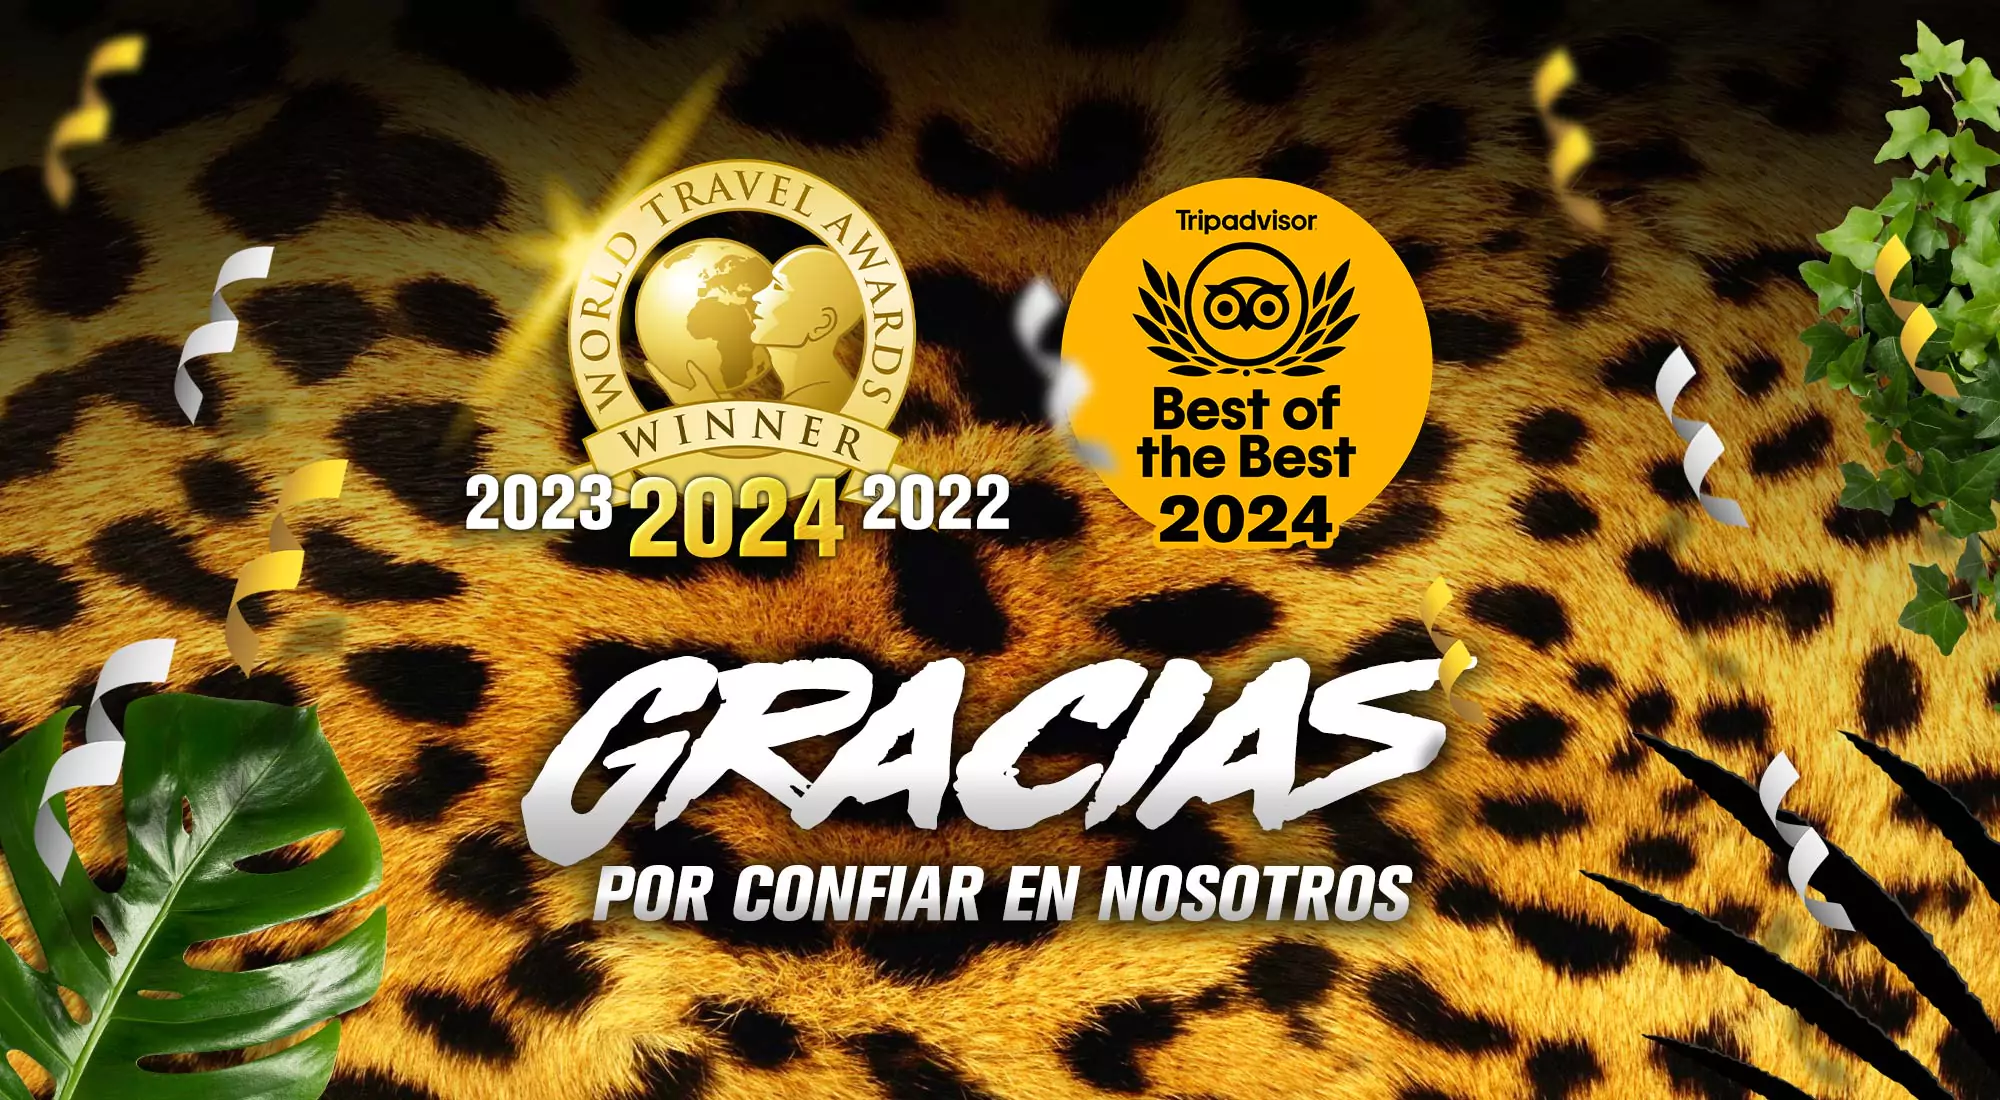 world travel award winner 2022 and 2023